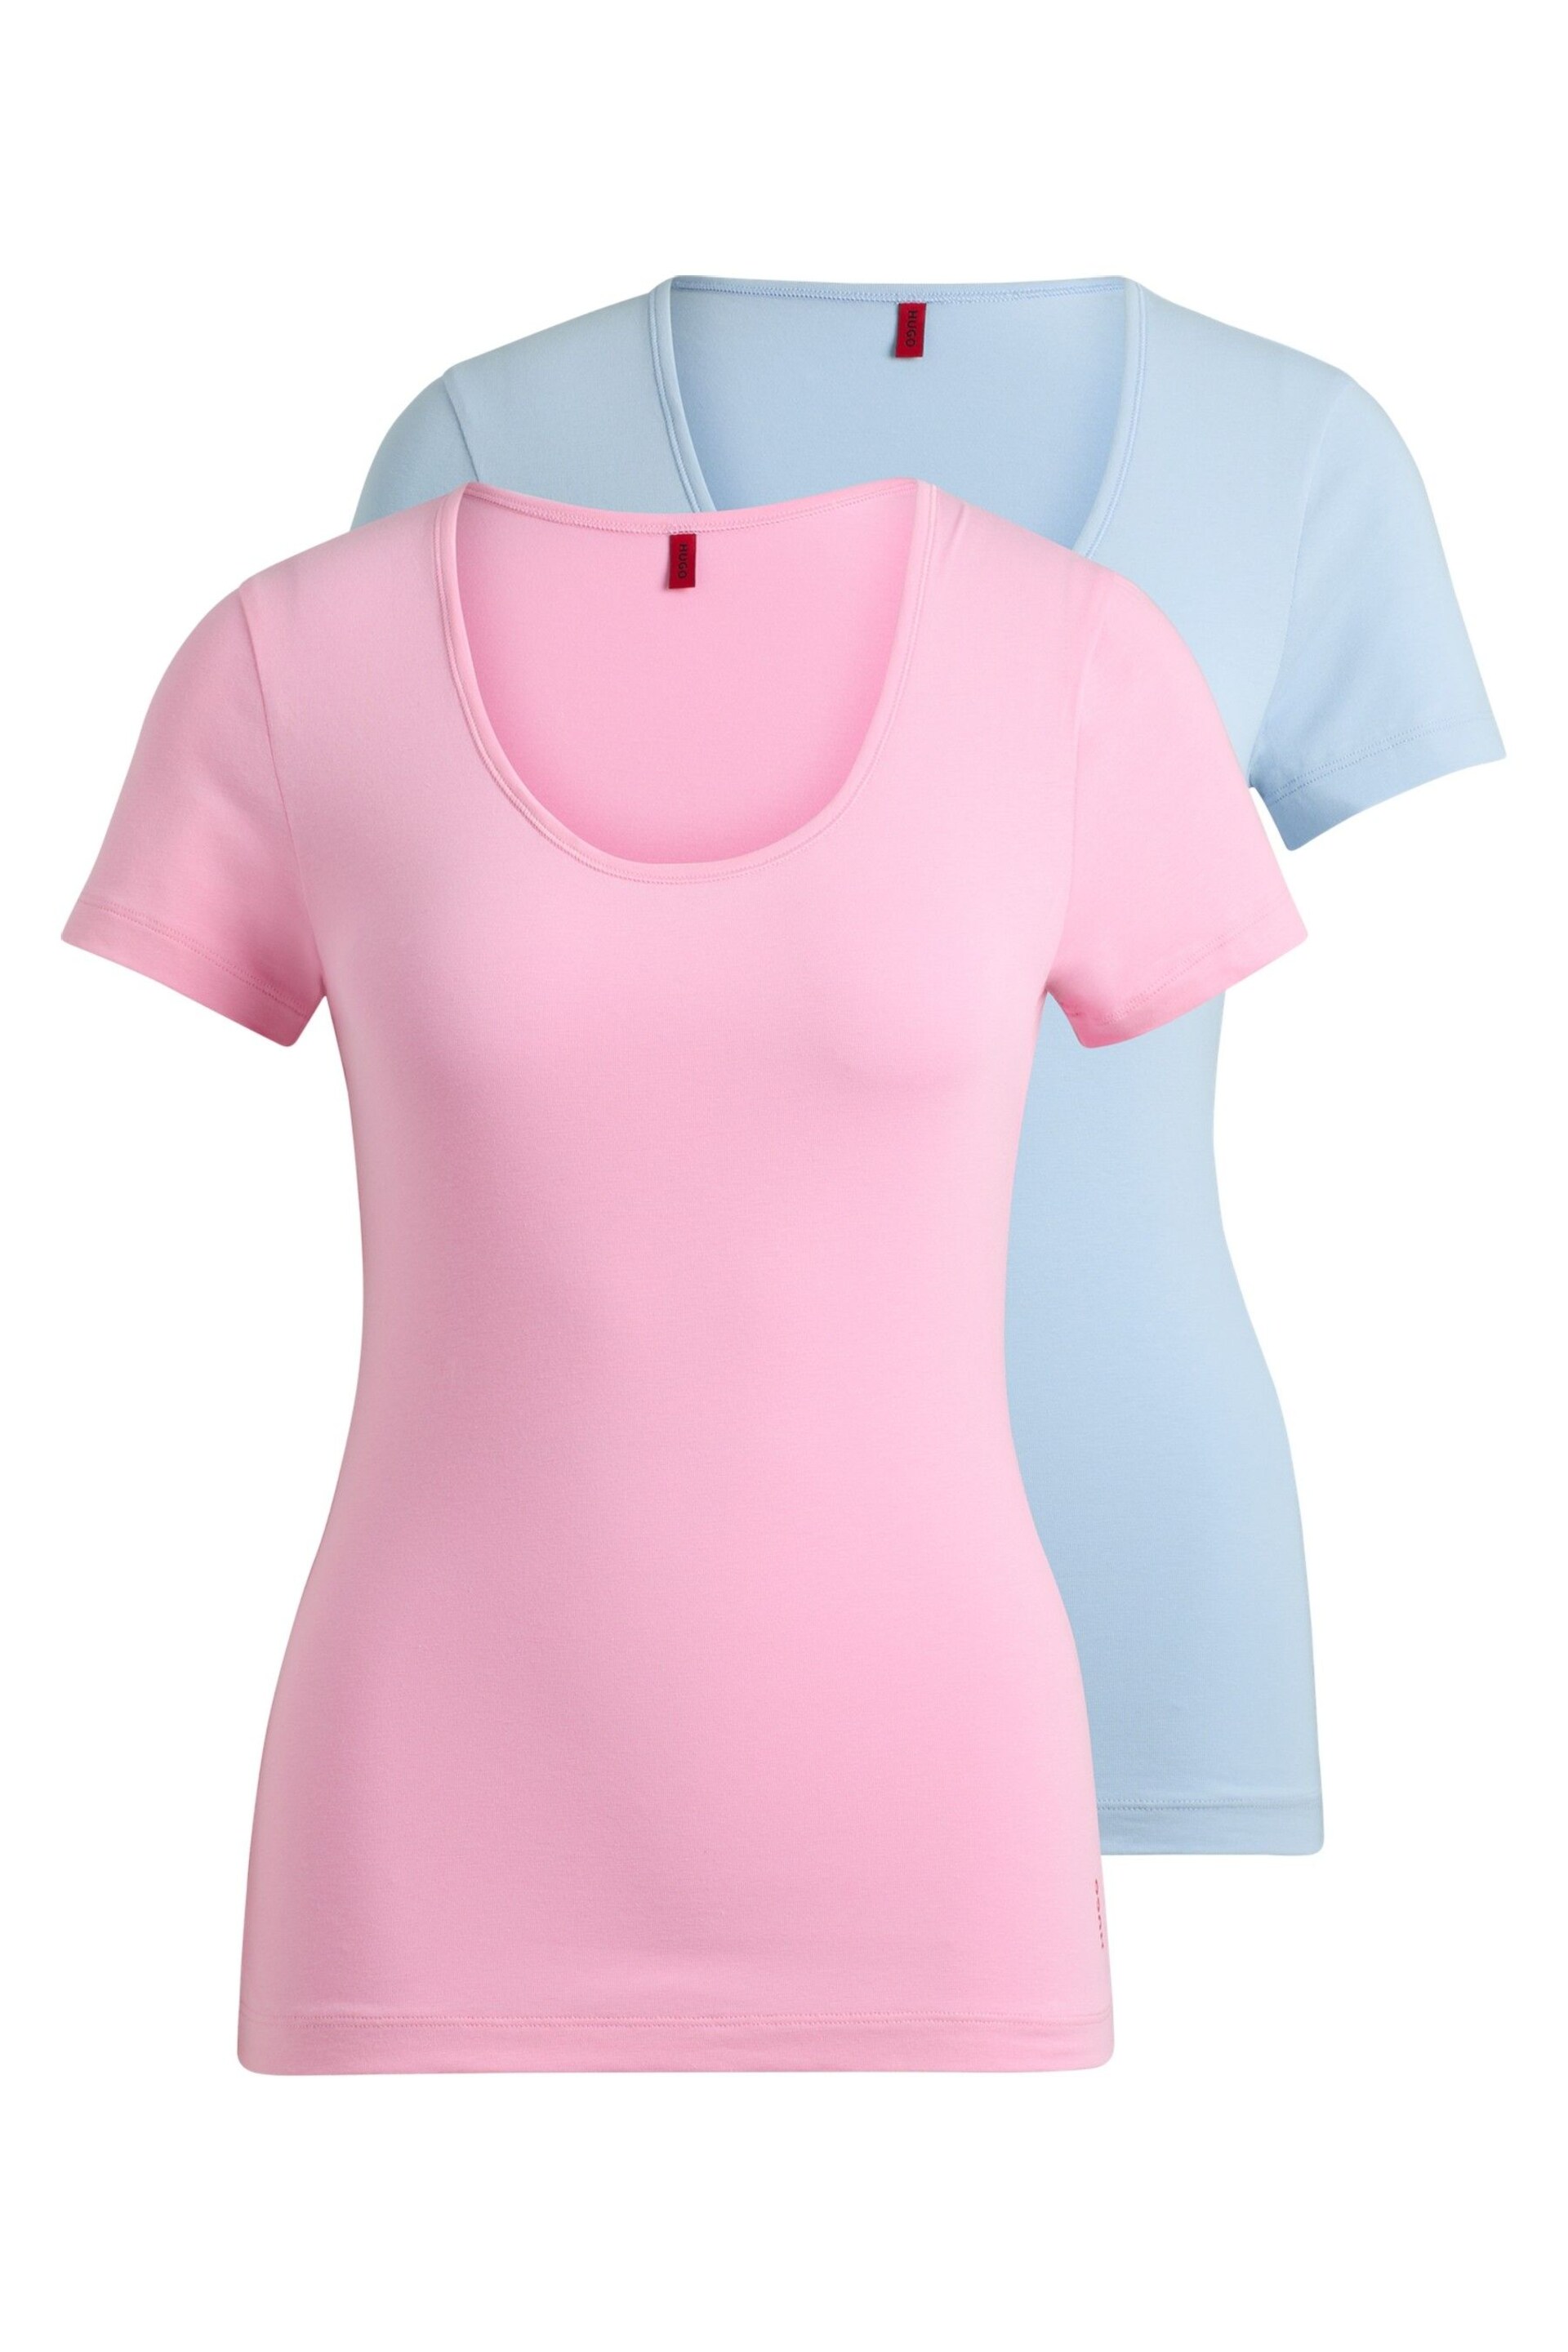 HUGO Pink/Blue Stretch Cotton Underwear T-Shirts 2 Pack - Image 1 of 5